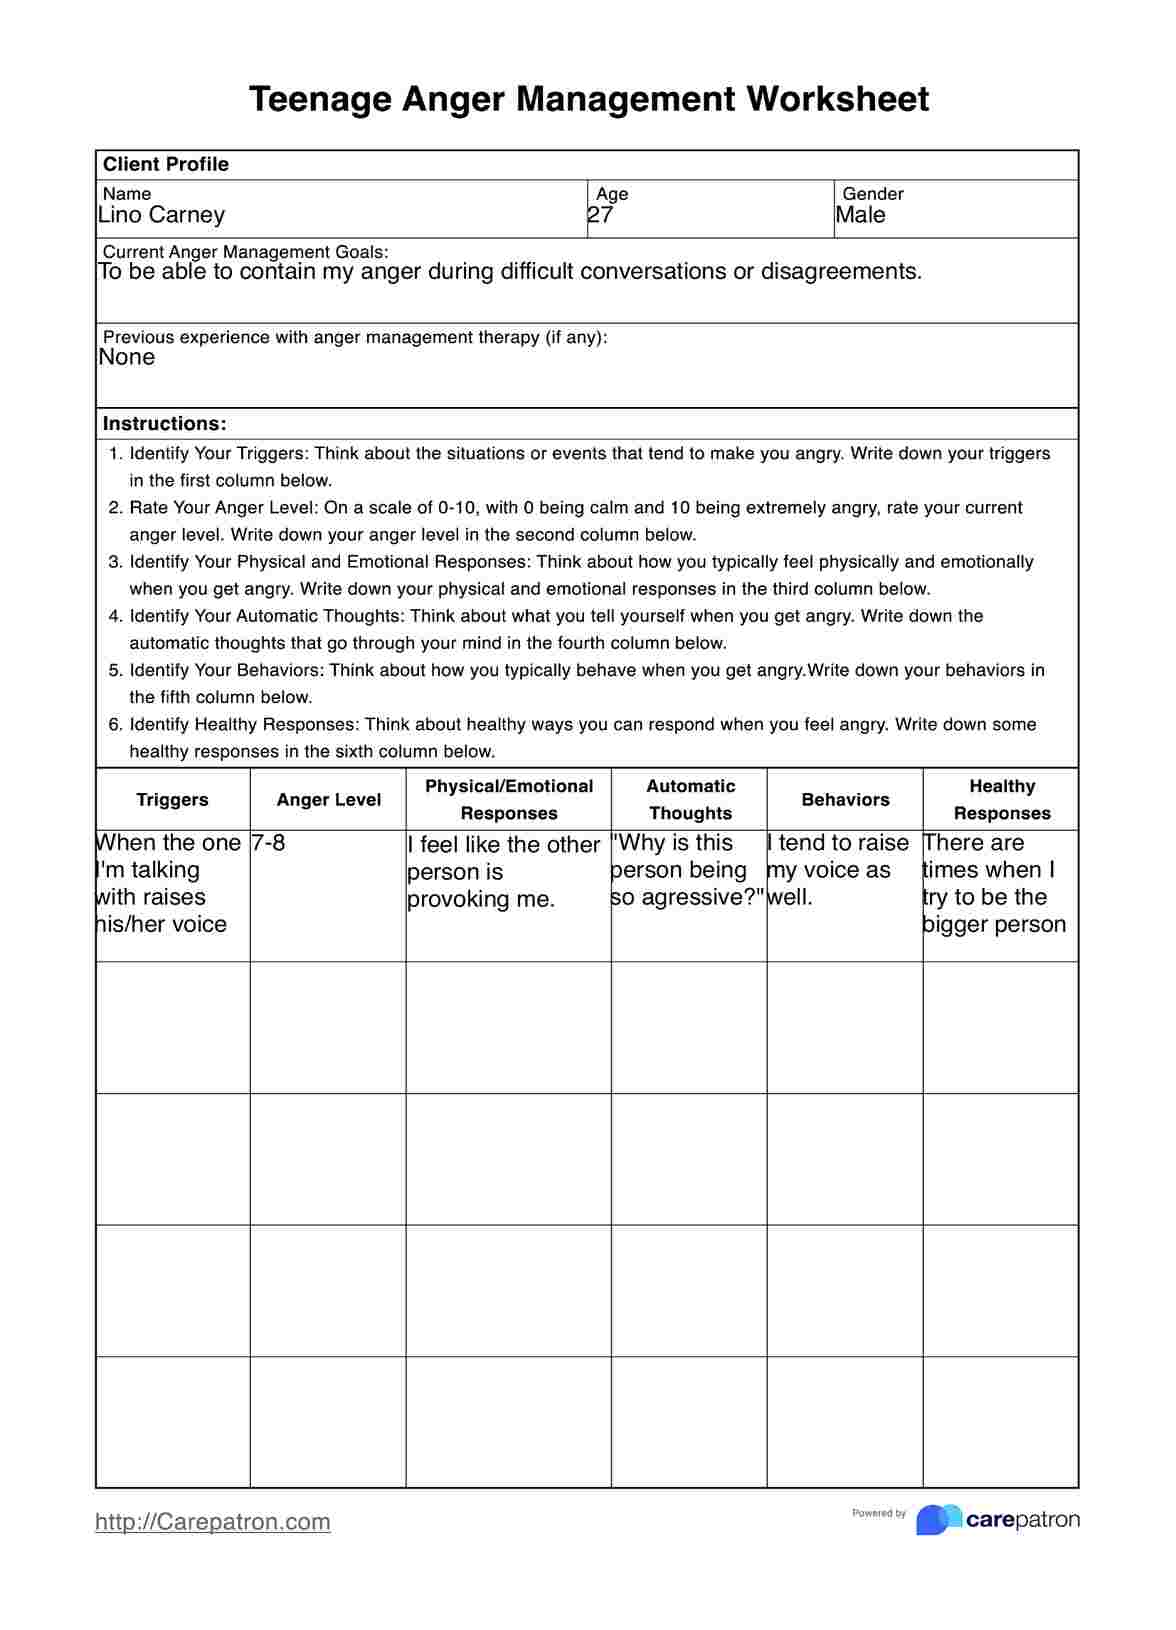 Teenage Anger Management Worksheets PDF Example